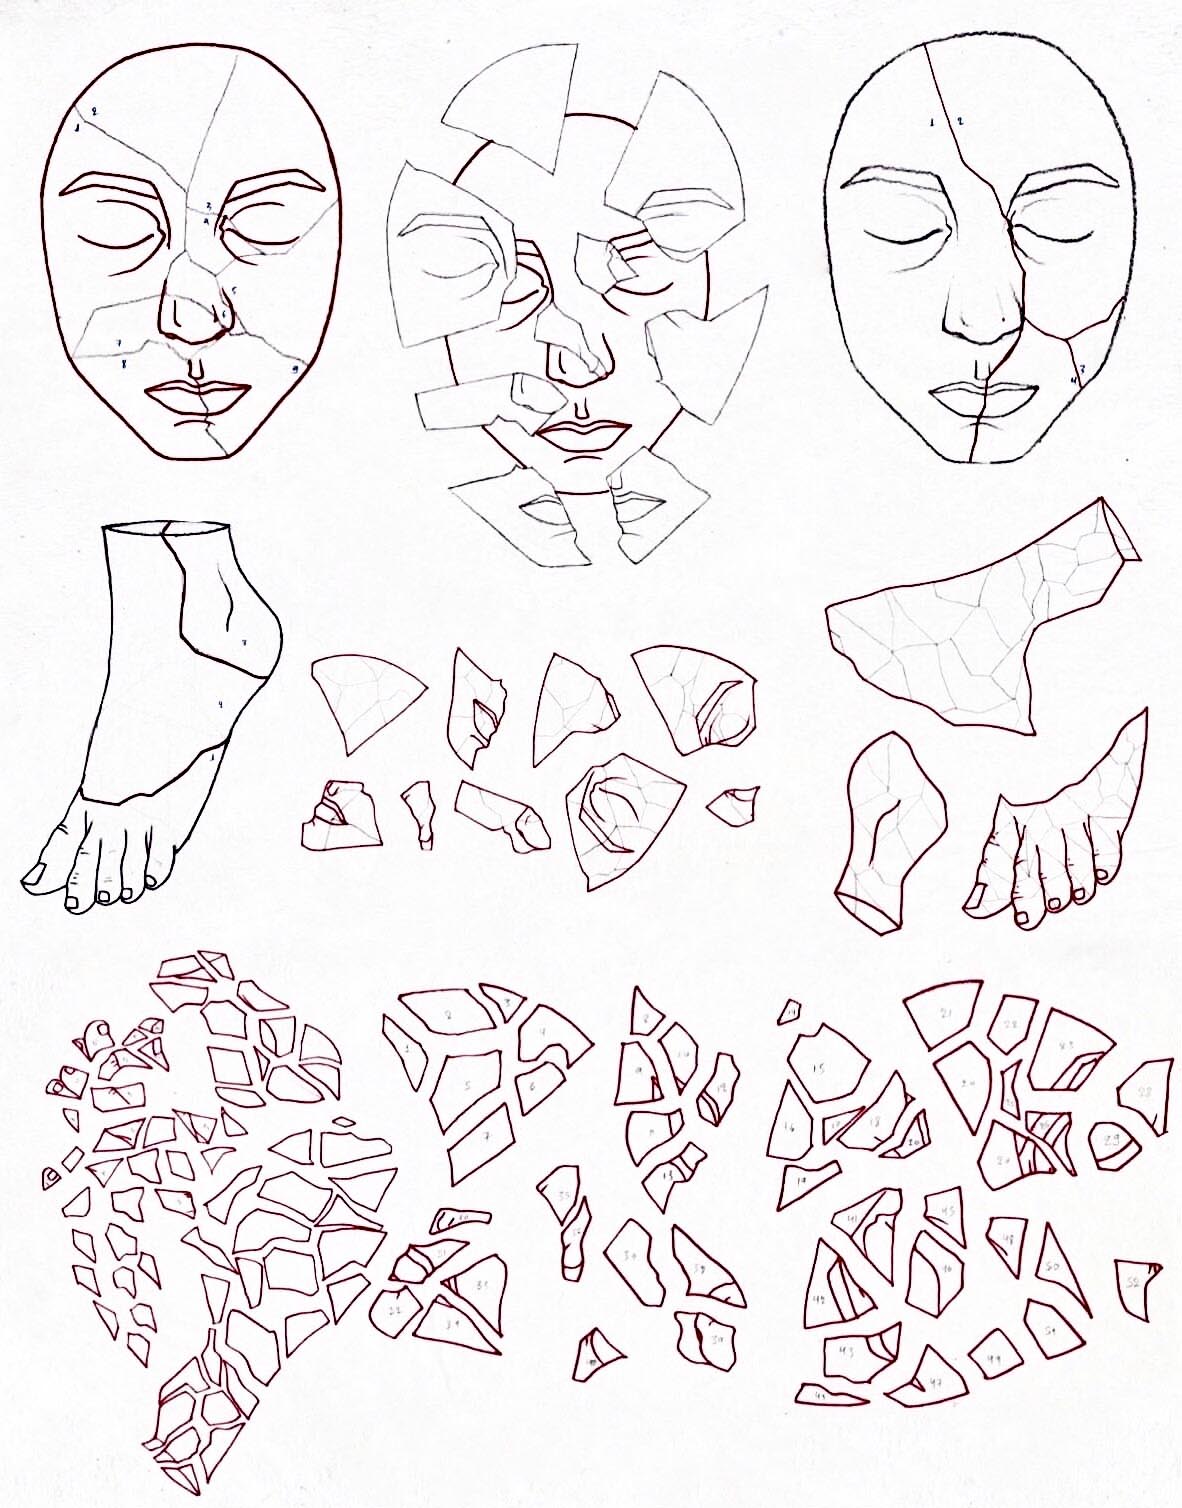 Fragments
Digital collage of handmade drawings 
42x53cm